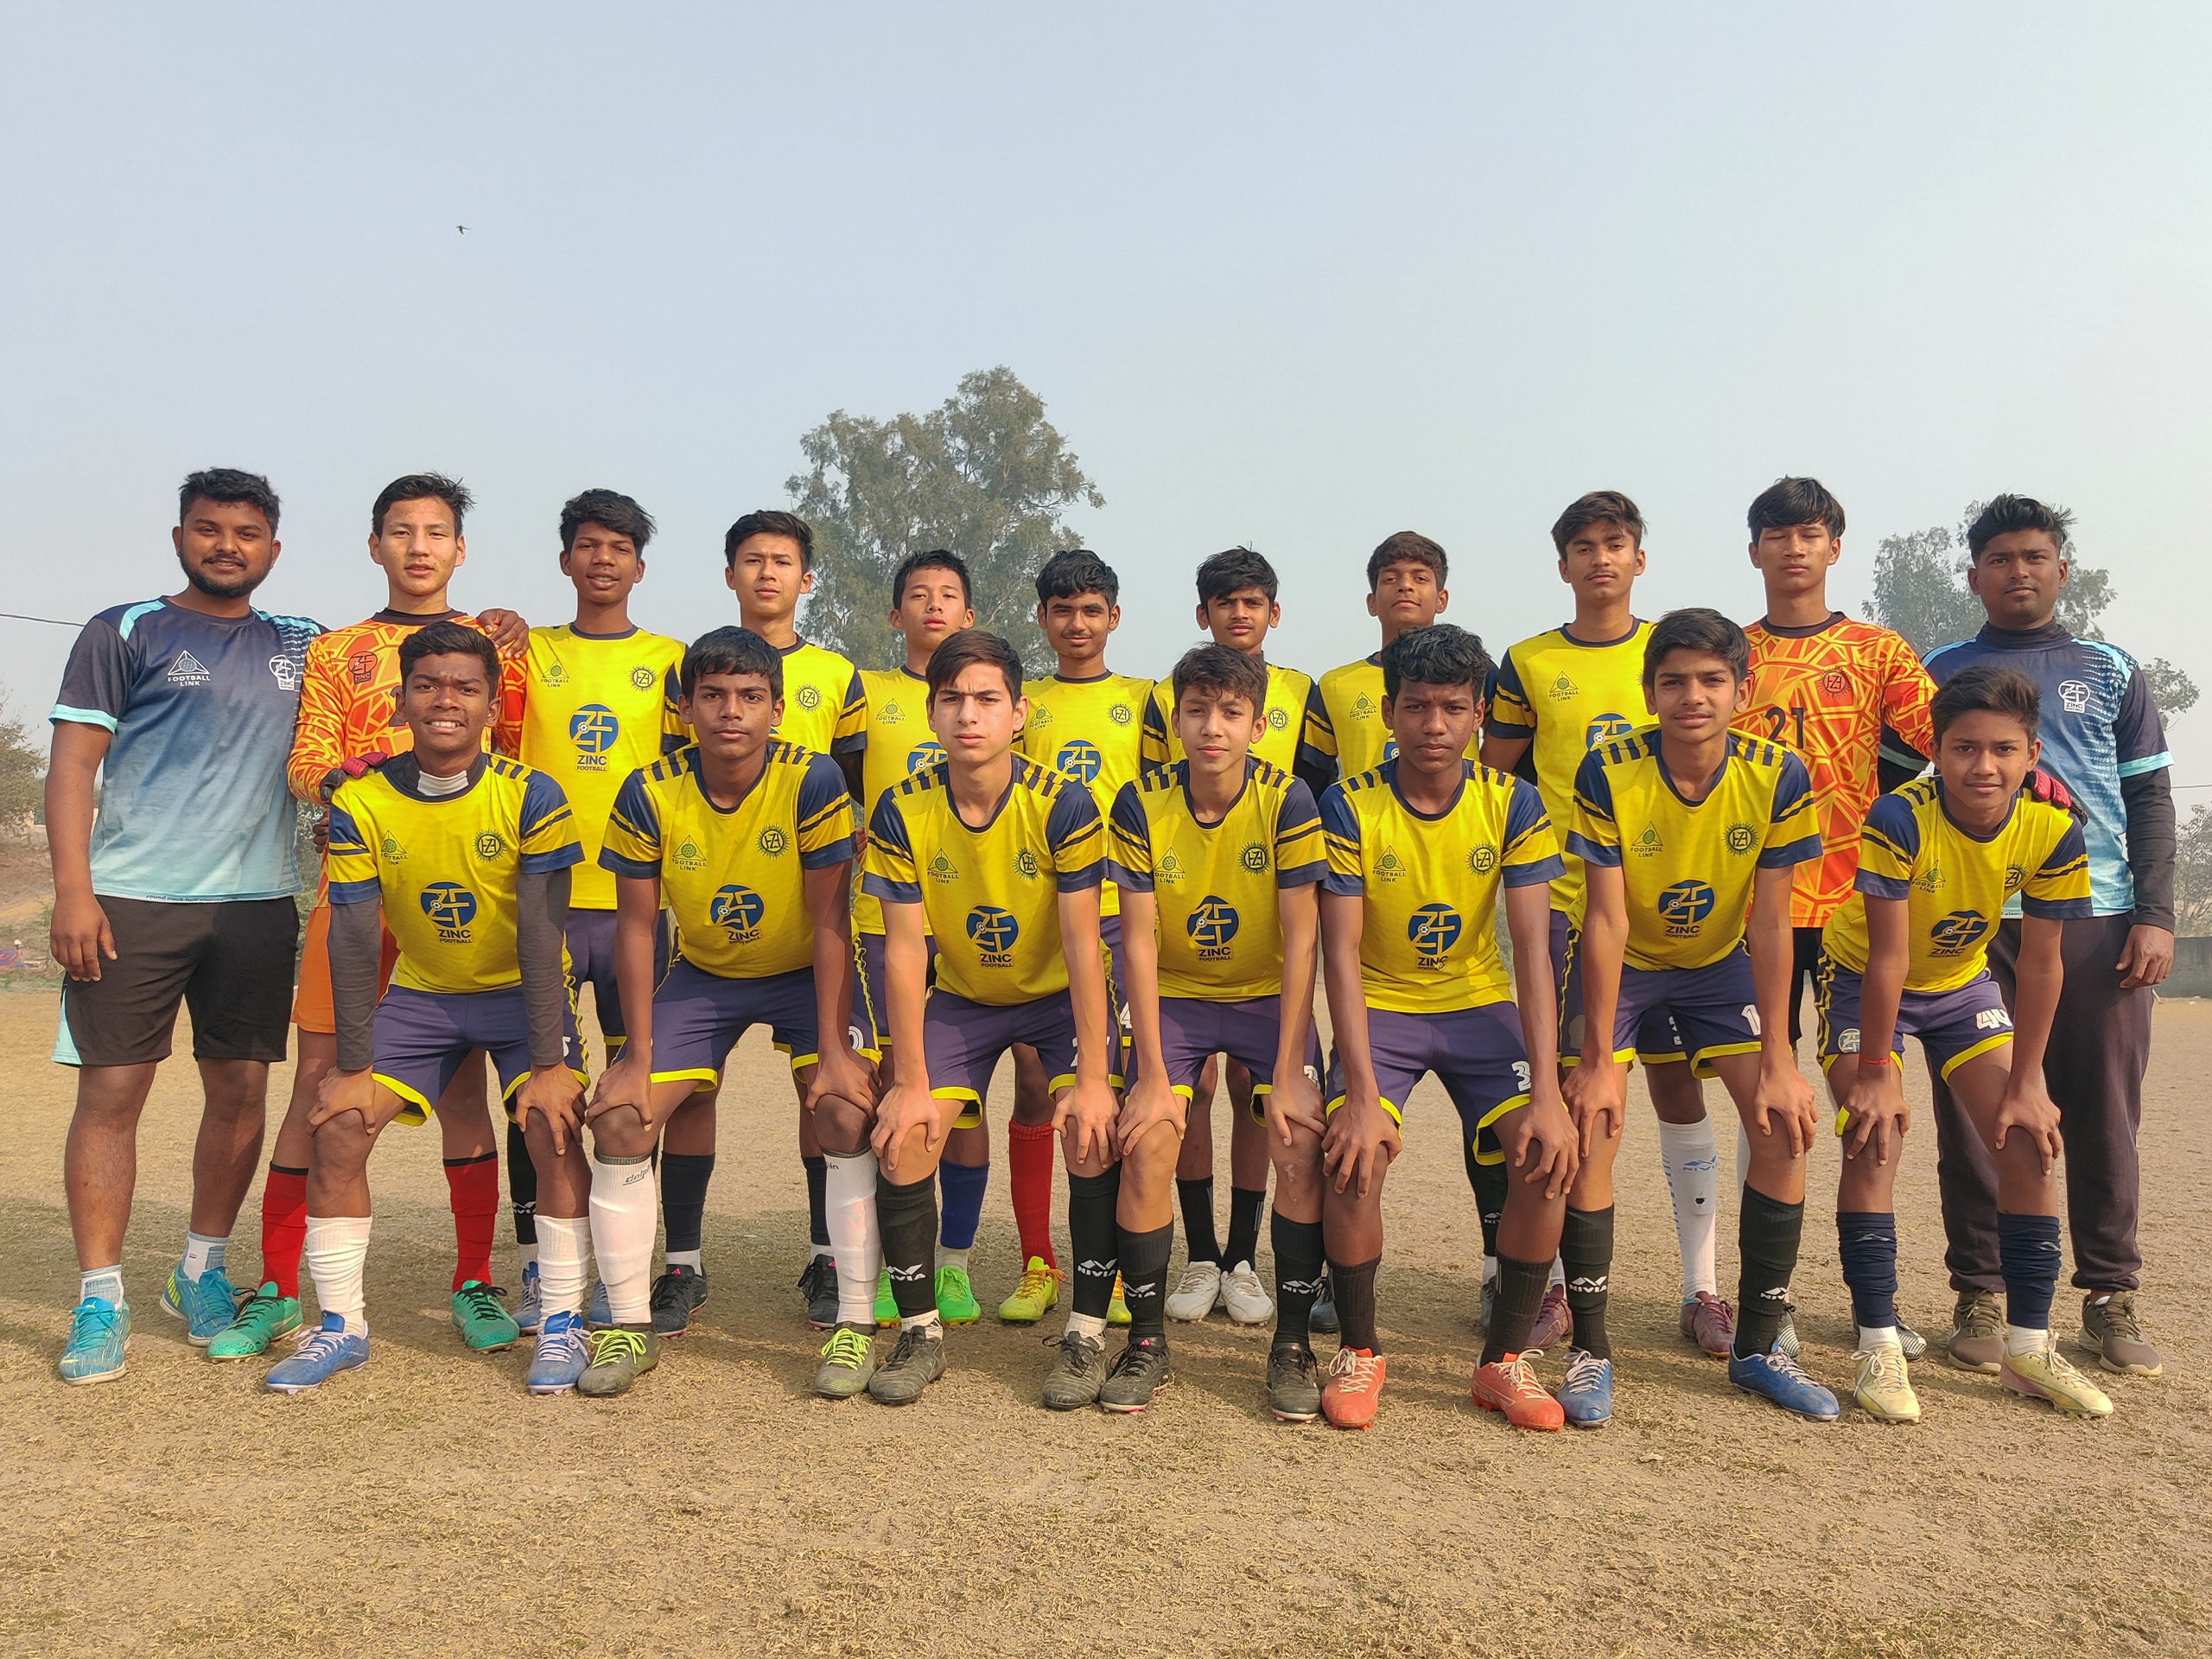 ZINC FOOTBALL ACADEMY PLAY FRIENDLIES IN DELHI AND CHANDIGARH